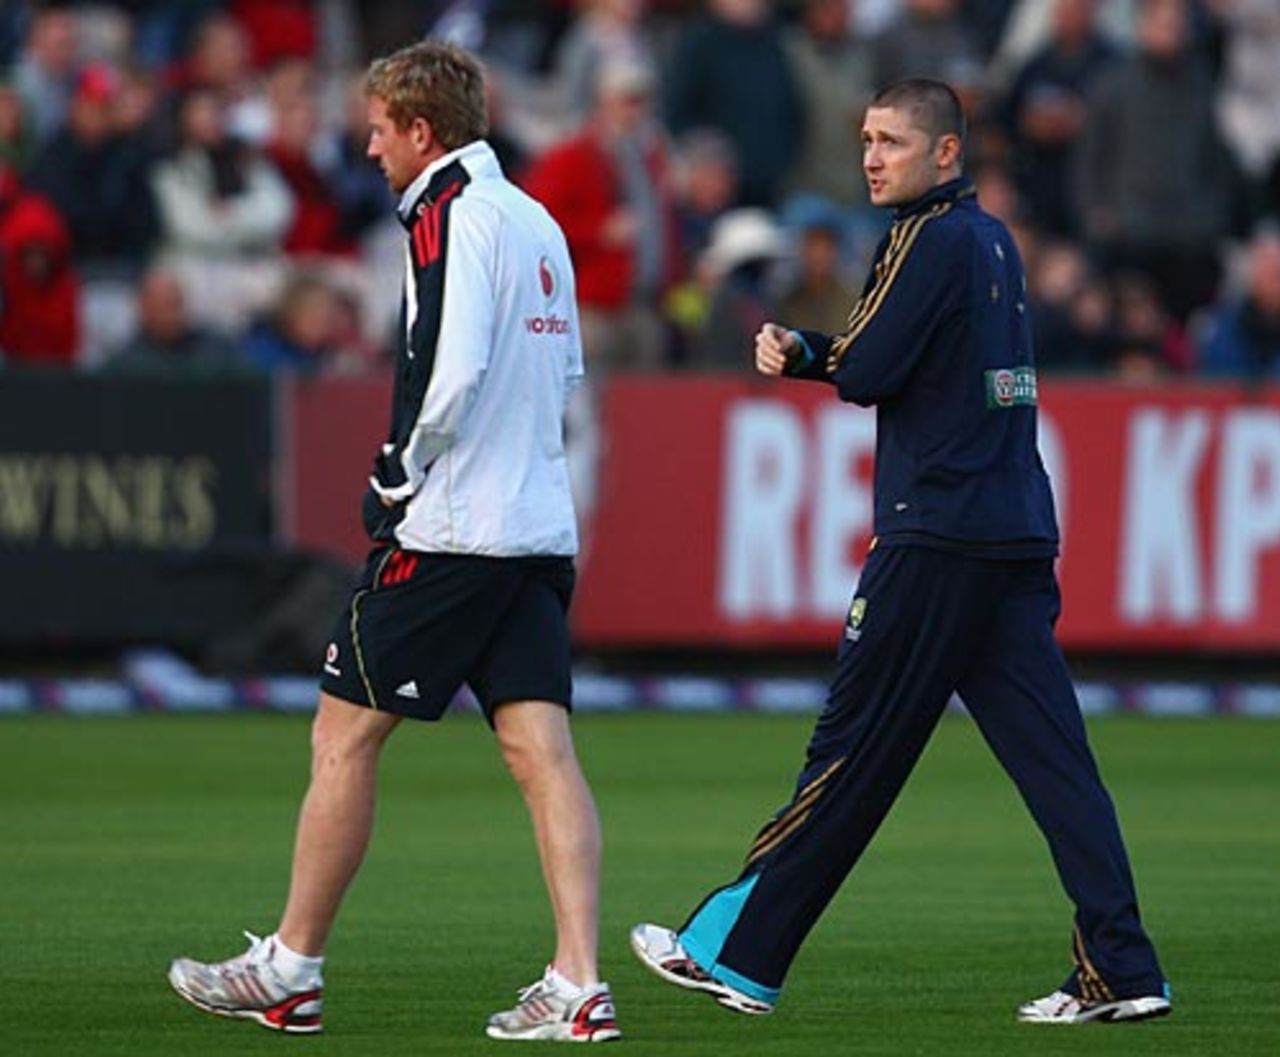 Paul Collingwood and Michael Clarke walk off the field, England v Australia, 2nd Twenty20 international, Old Trafford, September 1, 2009